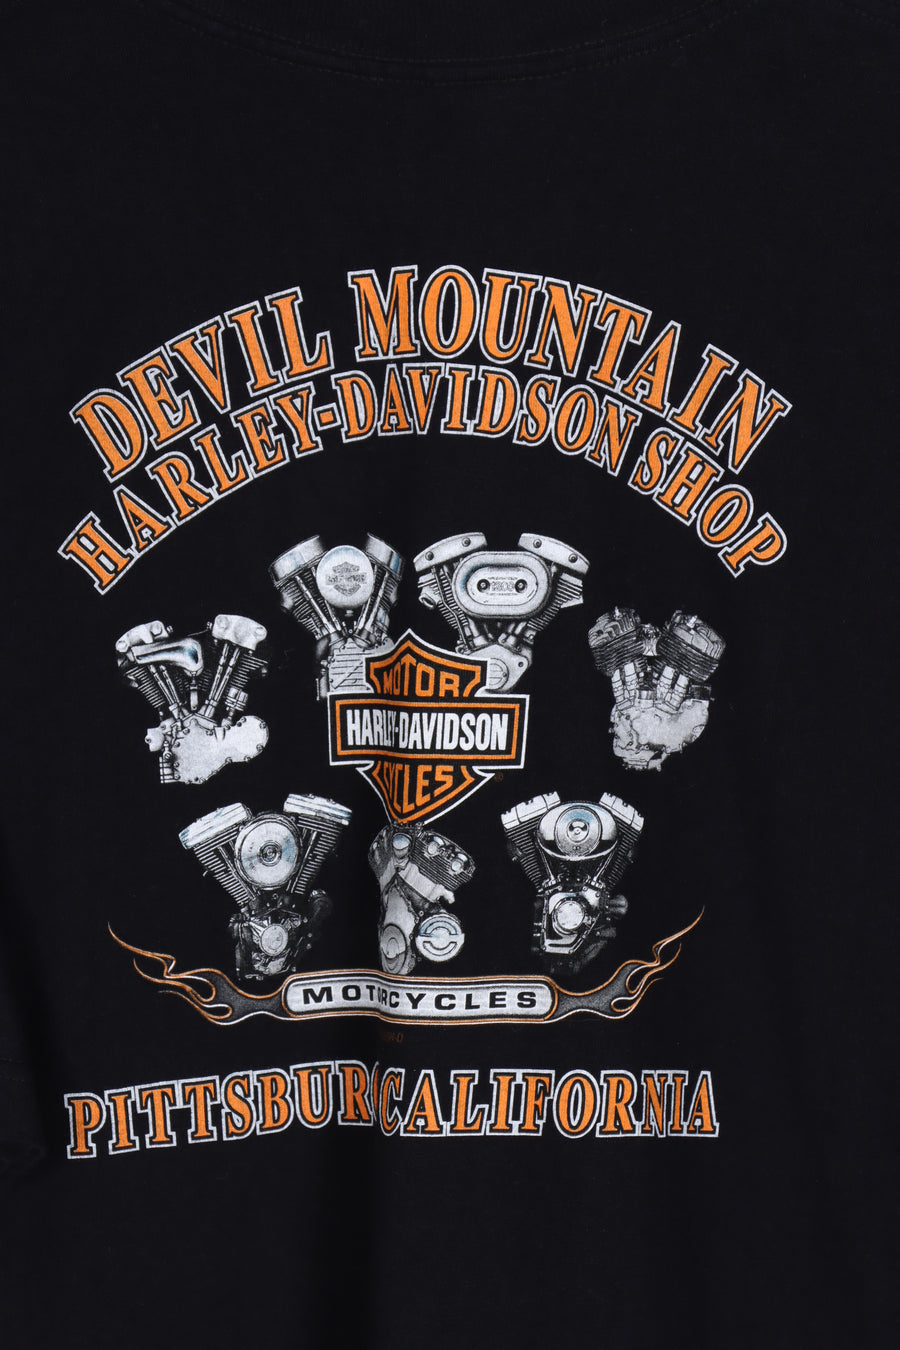 HARLEY DAVIDSON Devil Mountain Pittsburgh Engine Graphic Tee (XL)